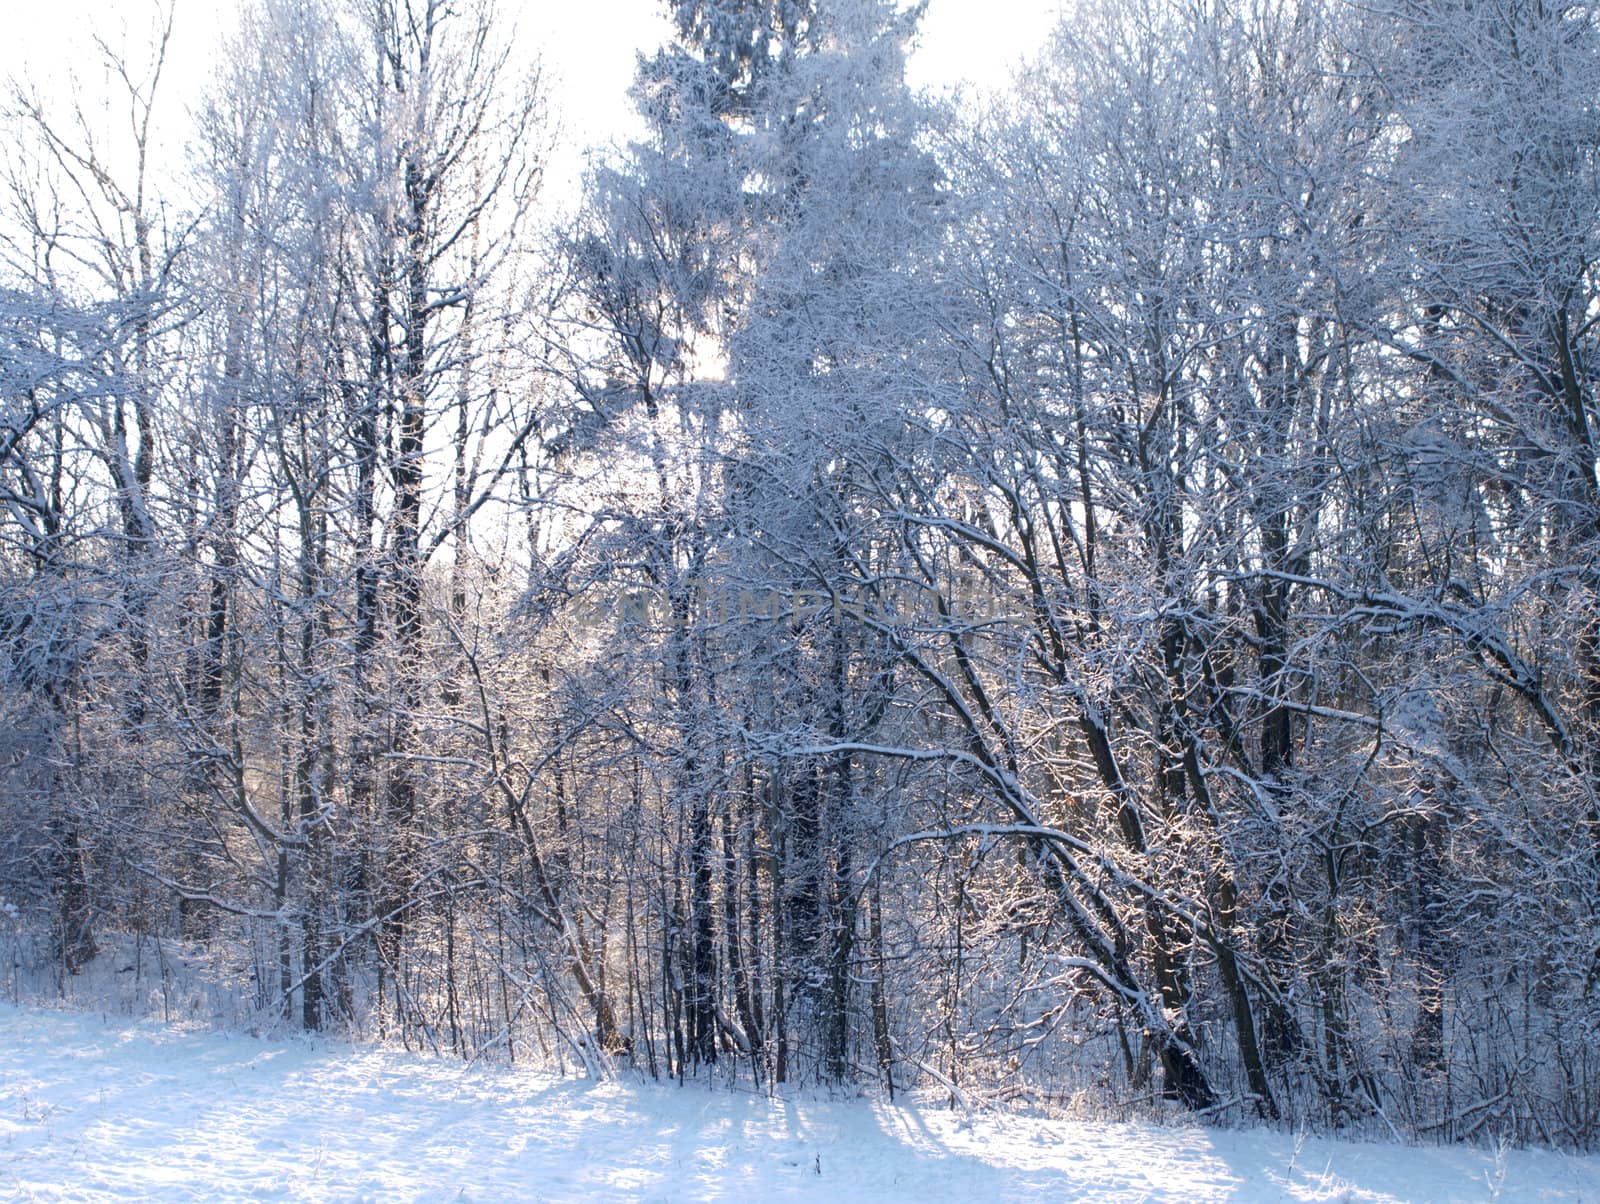 sunlight through trees in winter
